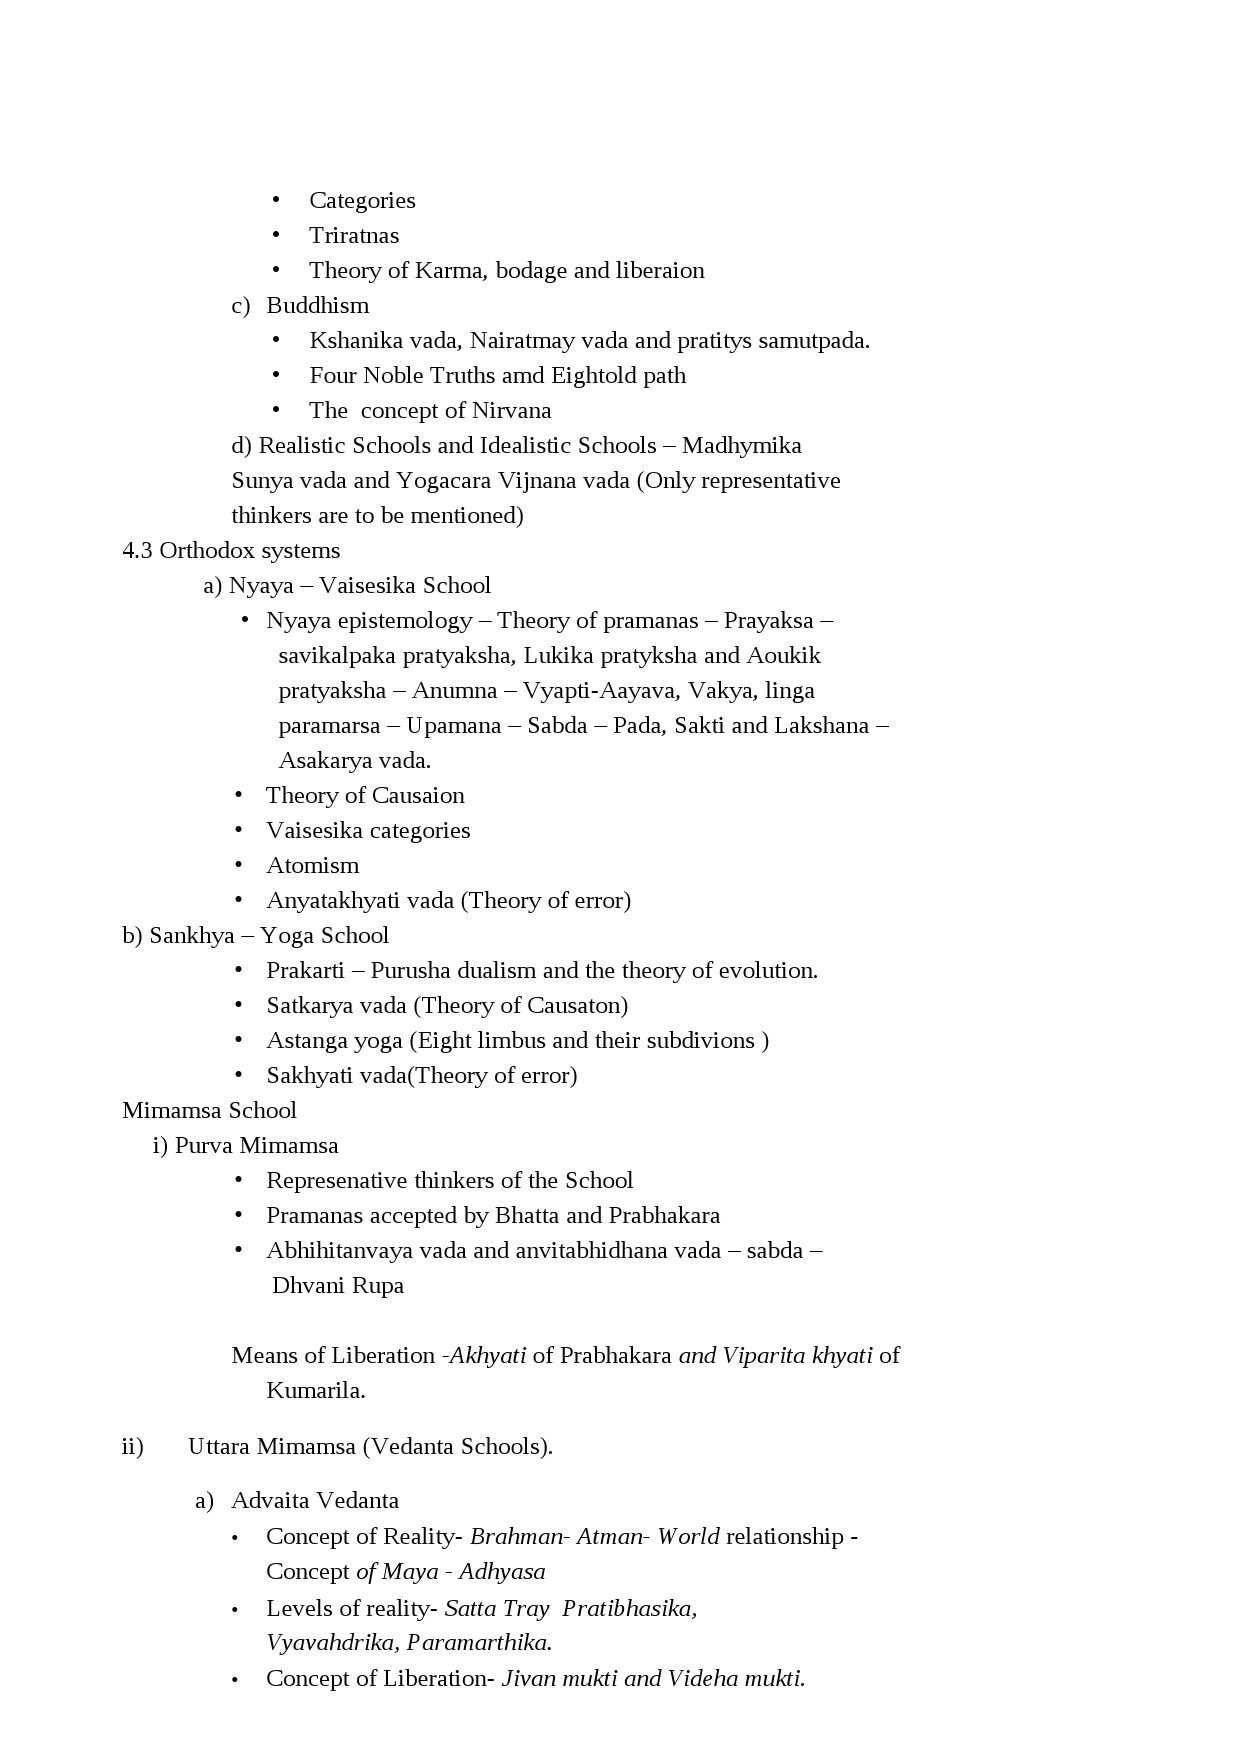 Humanities Syllabus for Kerala PSC 2021 Exam - Notification Image 2